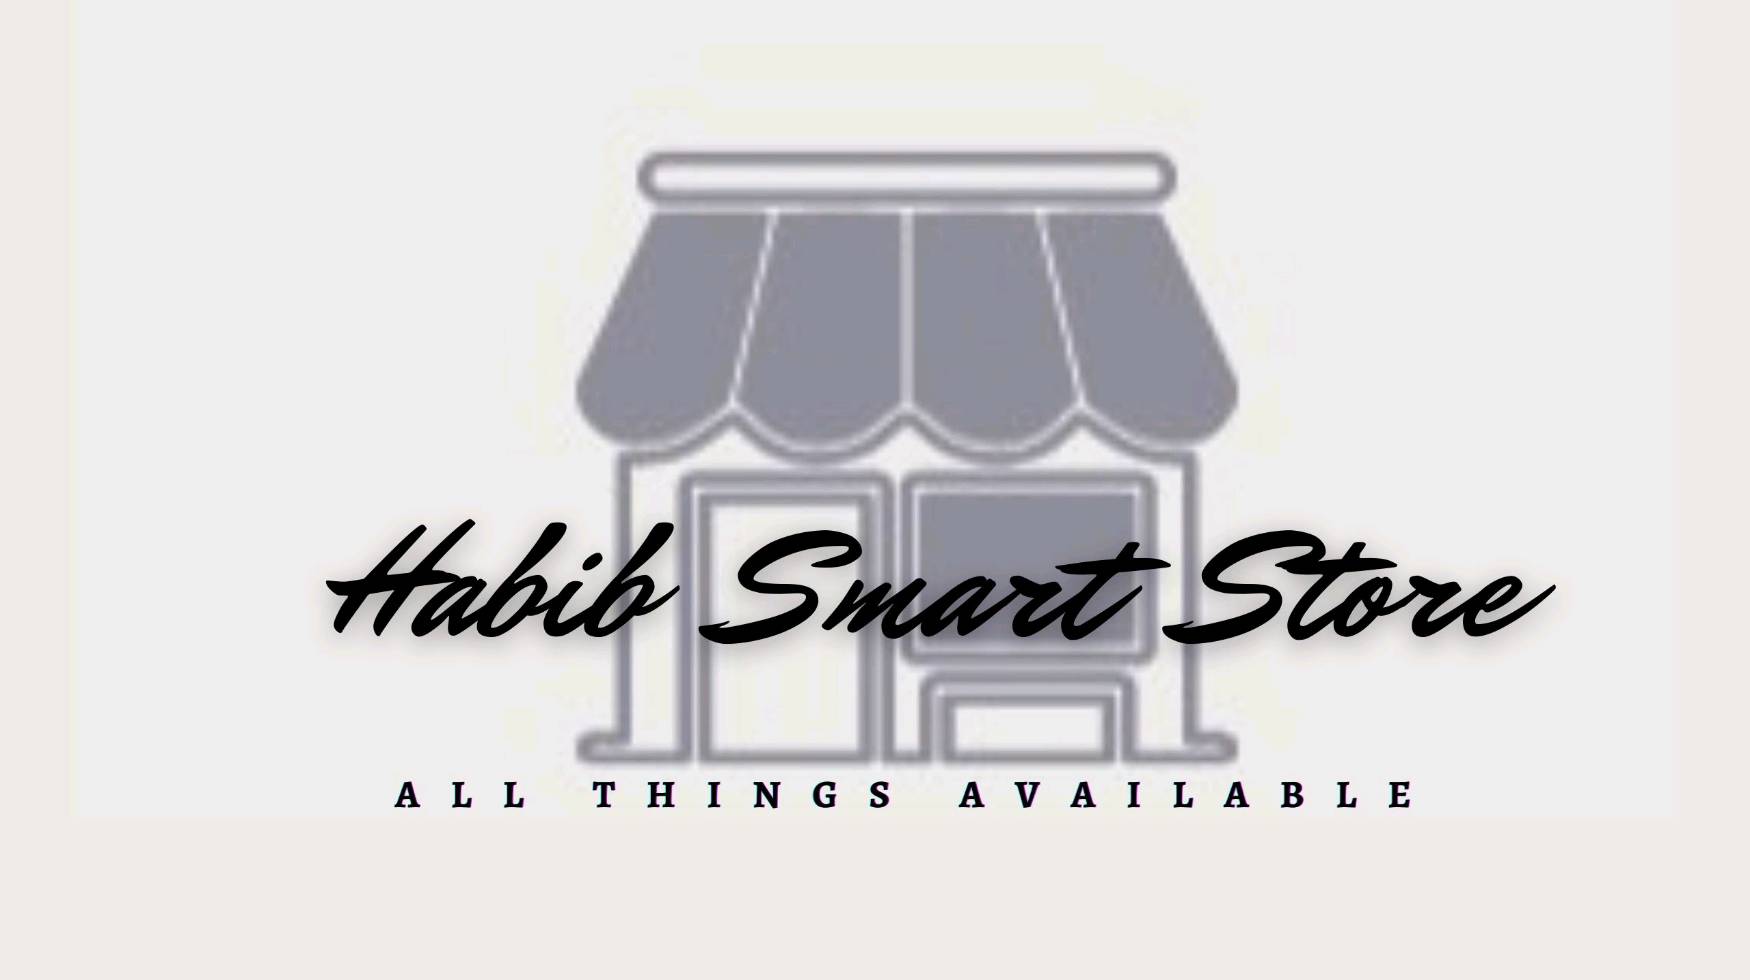 Habib Smart Store